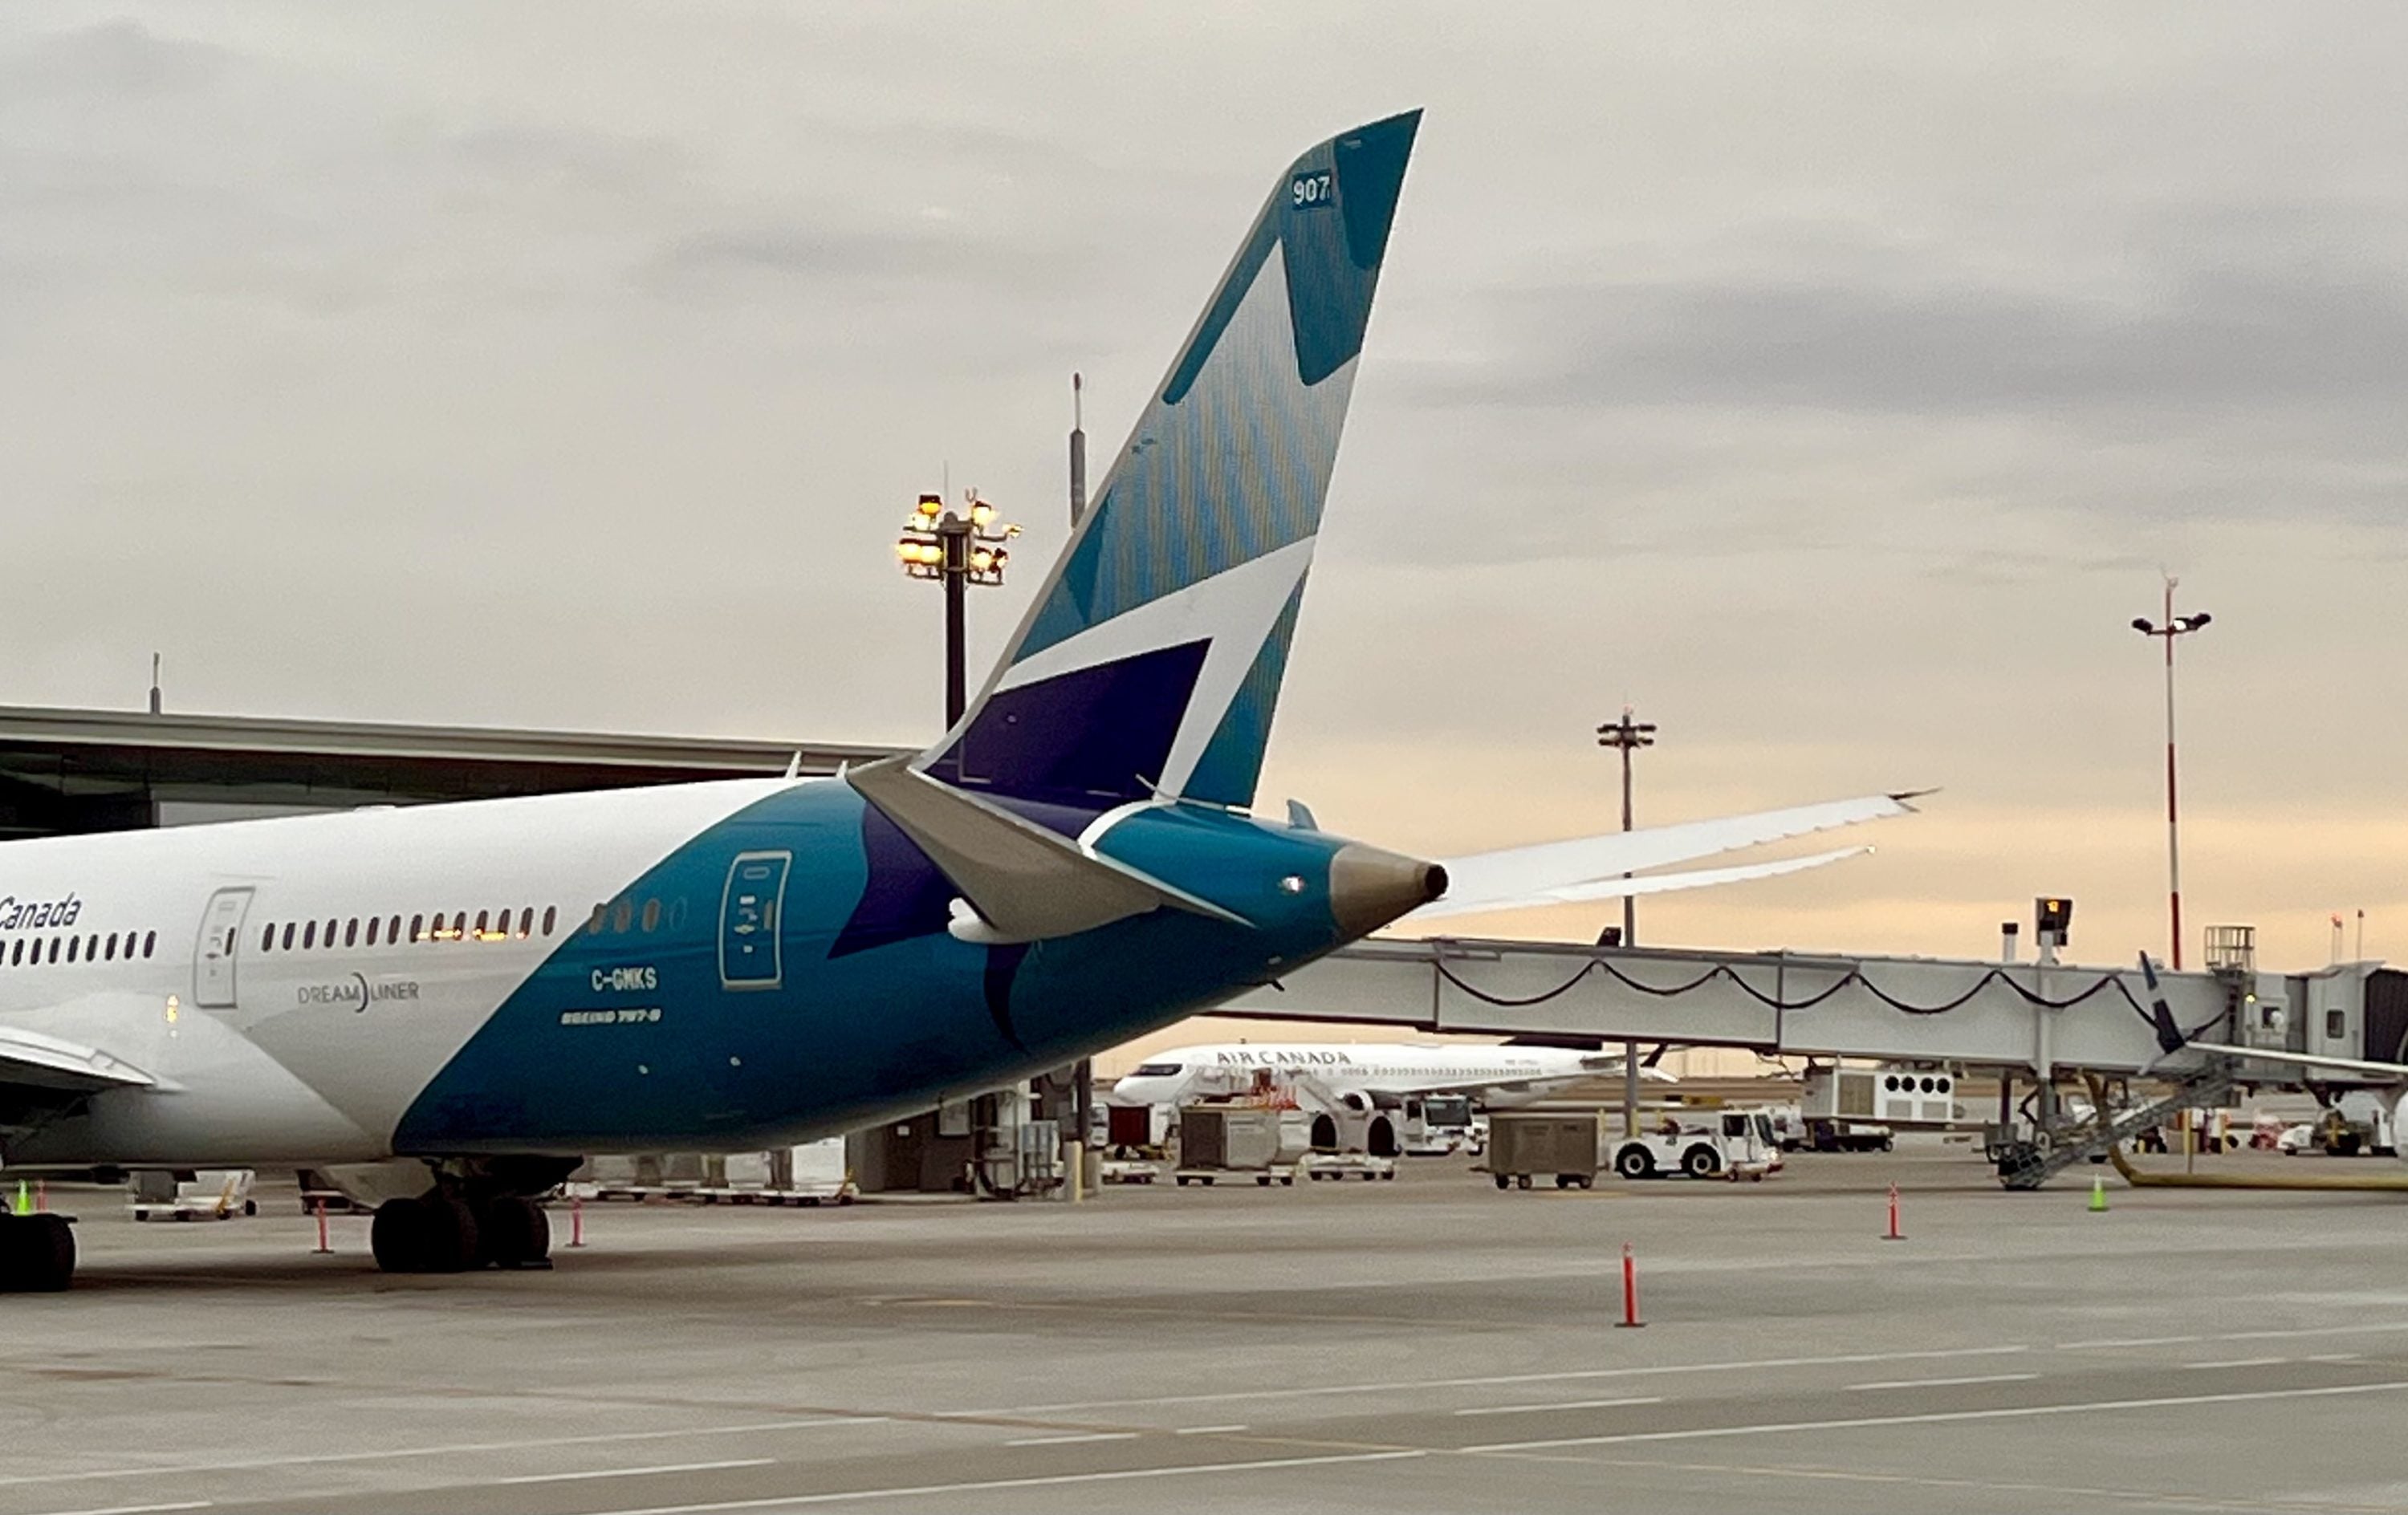 WestJet Boeing 787 Dreamliner at Calgary